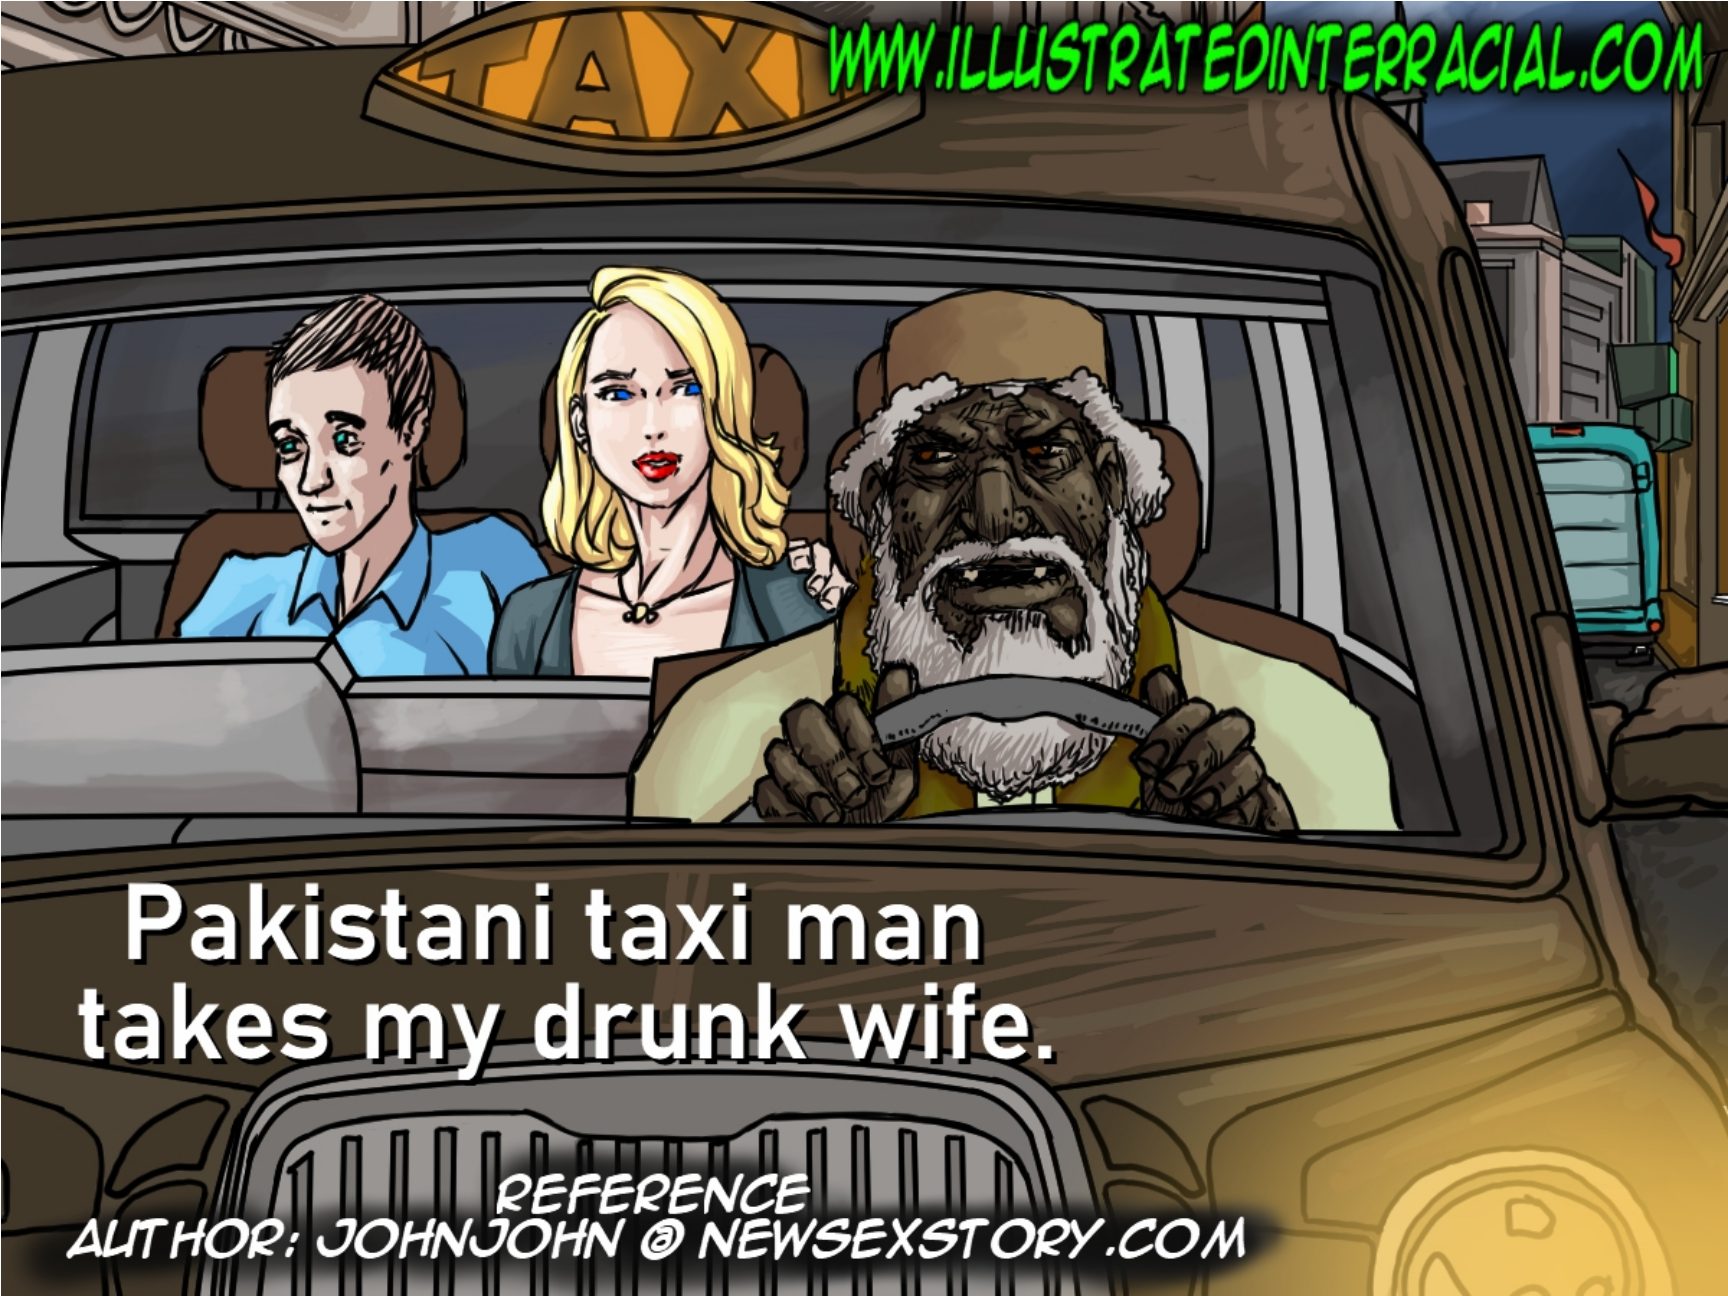 Pakastani Taxi Man - illustratedinterracial